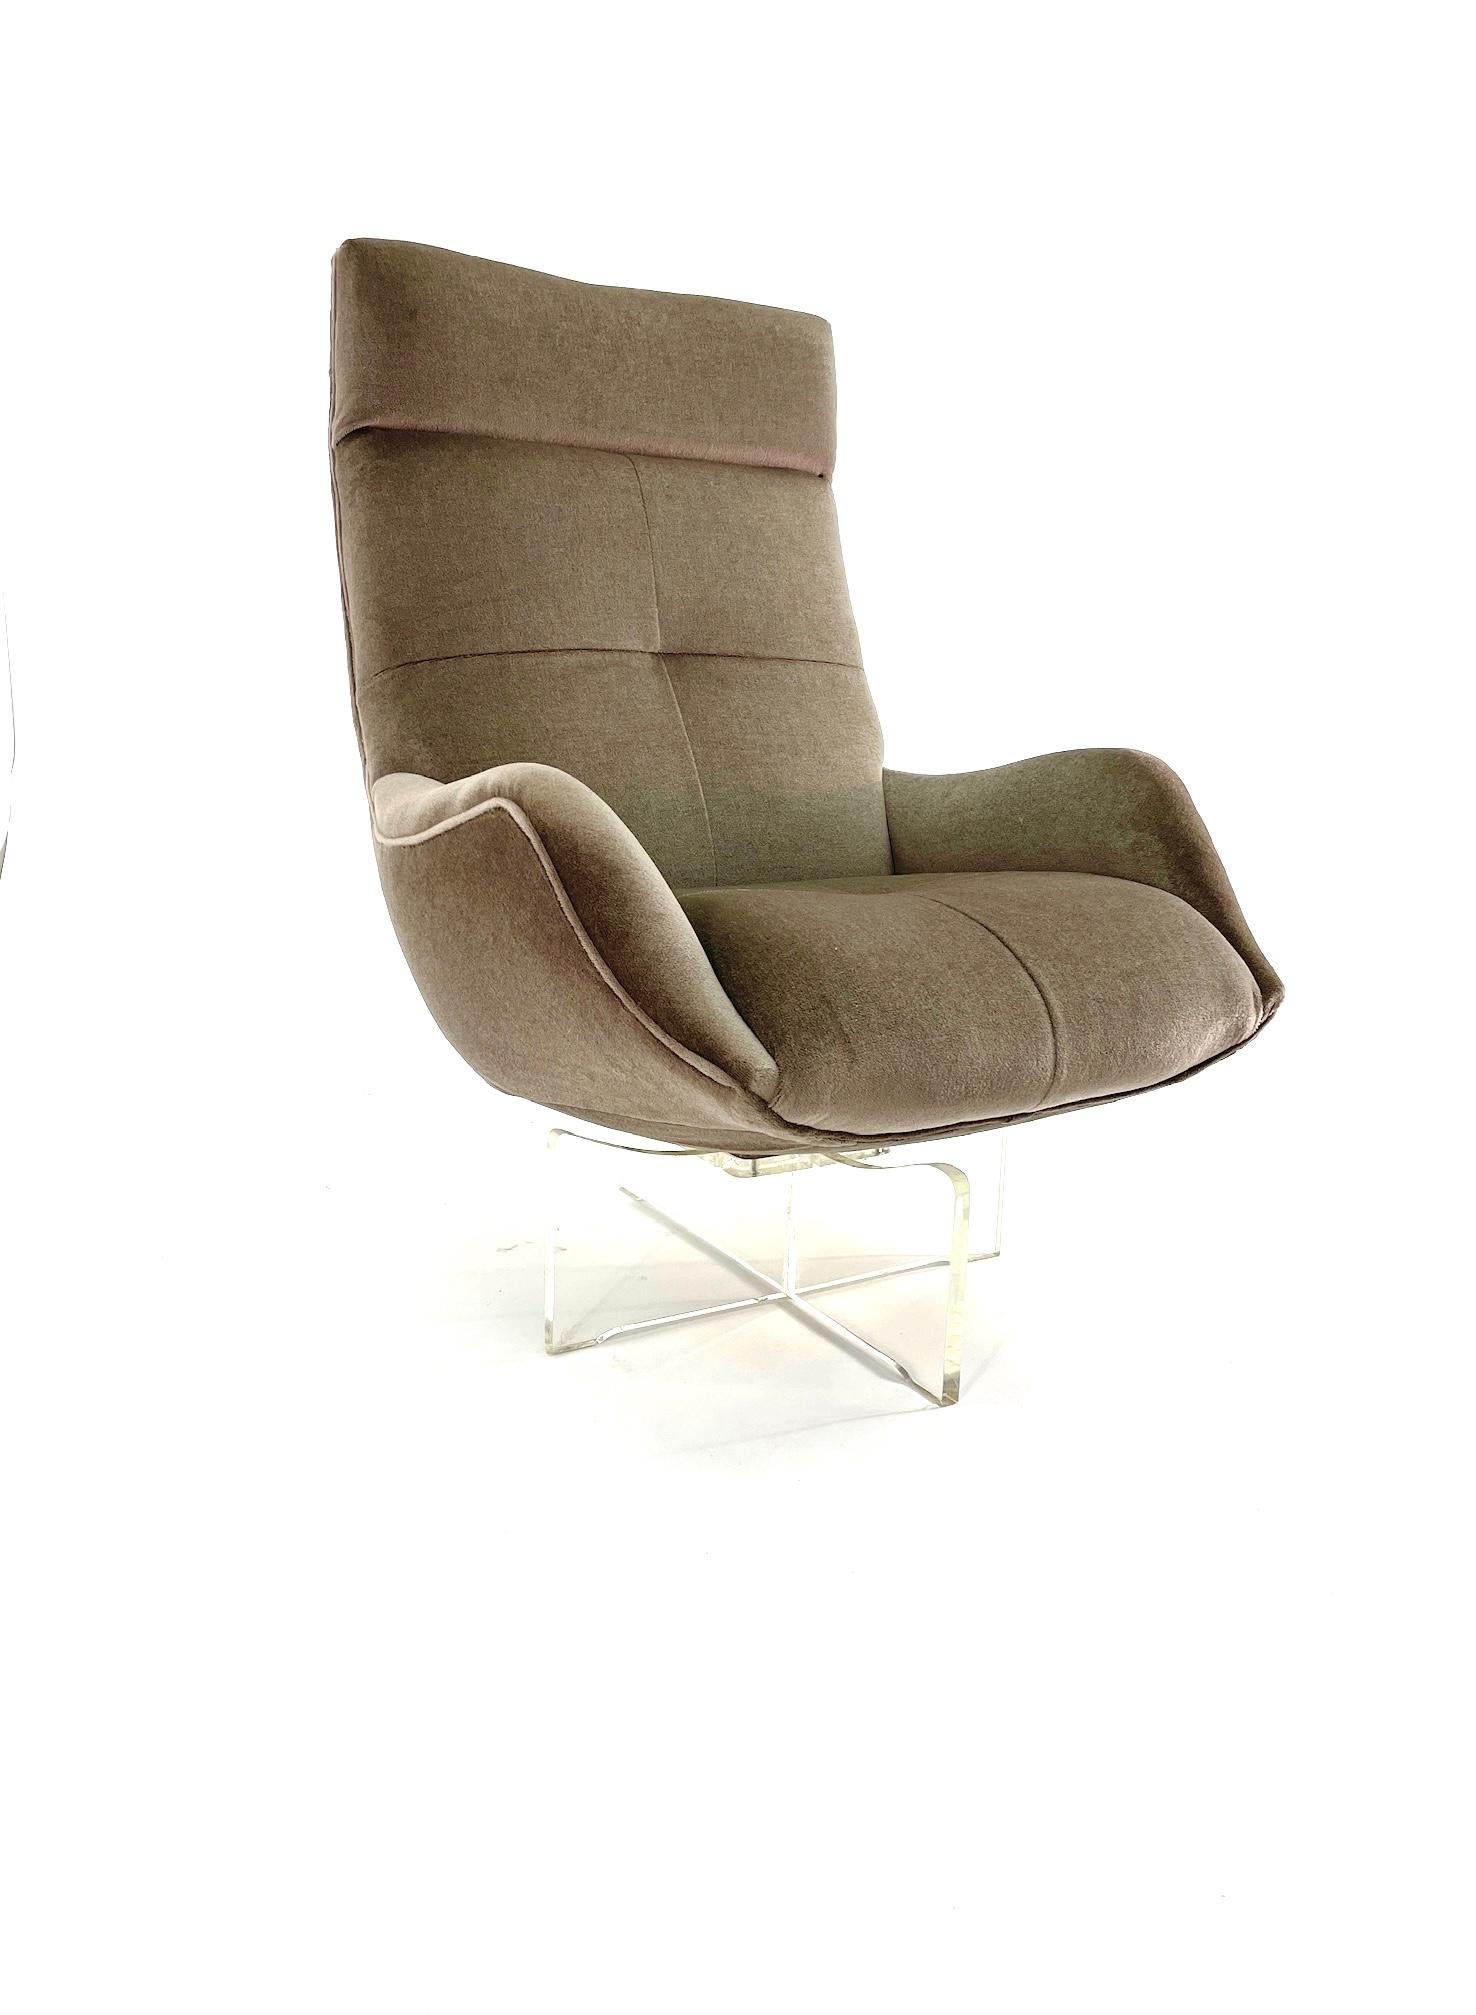 Vladimir Kagan Erica High Back Lounge Chair Model Circa 1967 For Sale